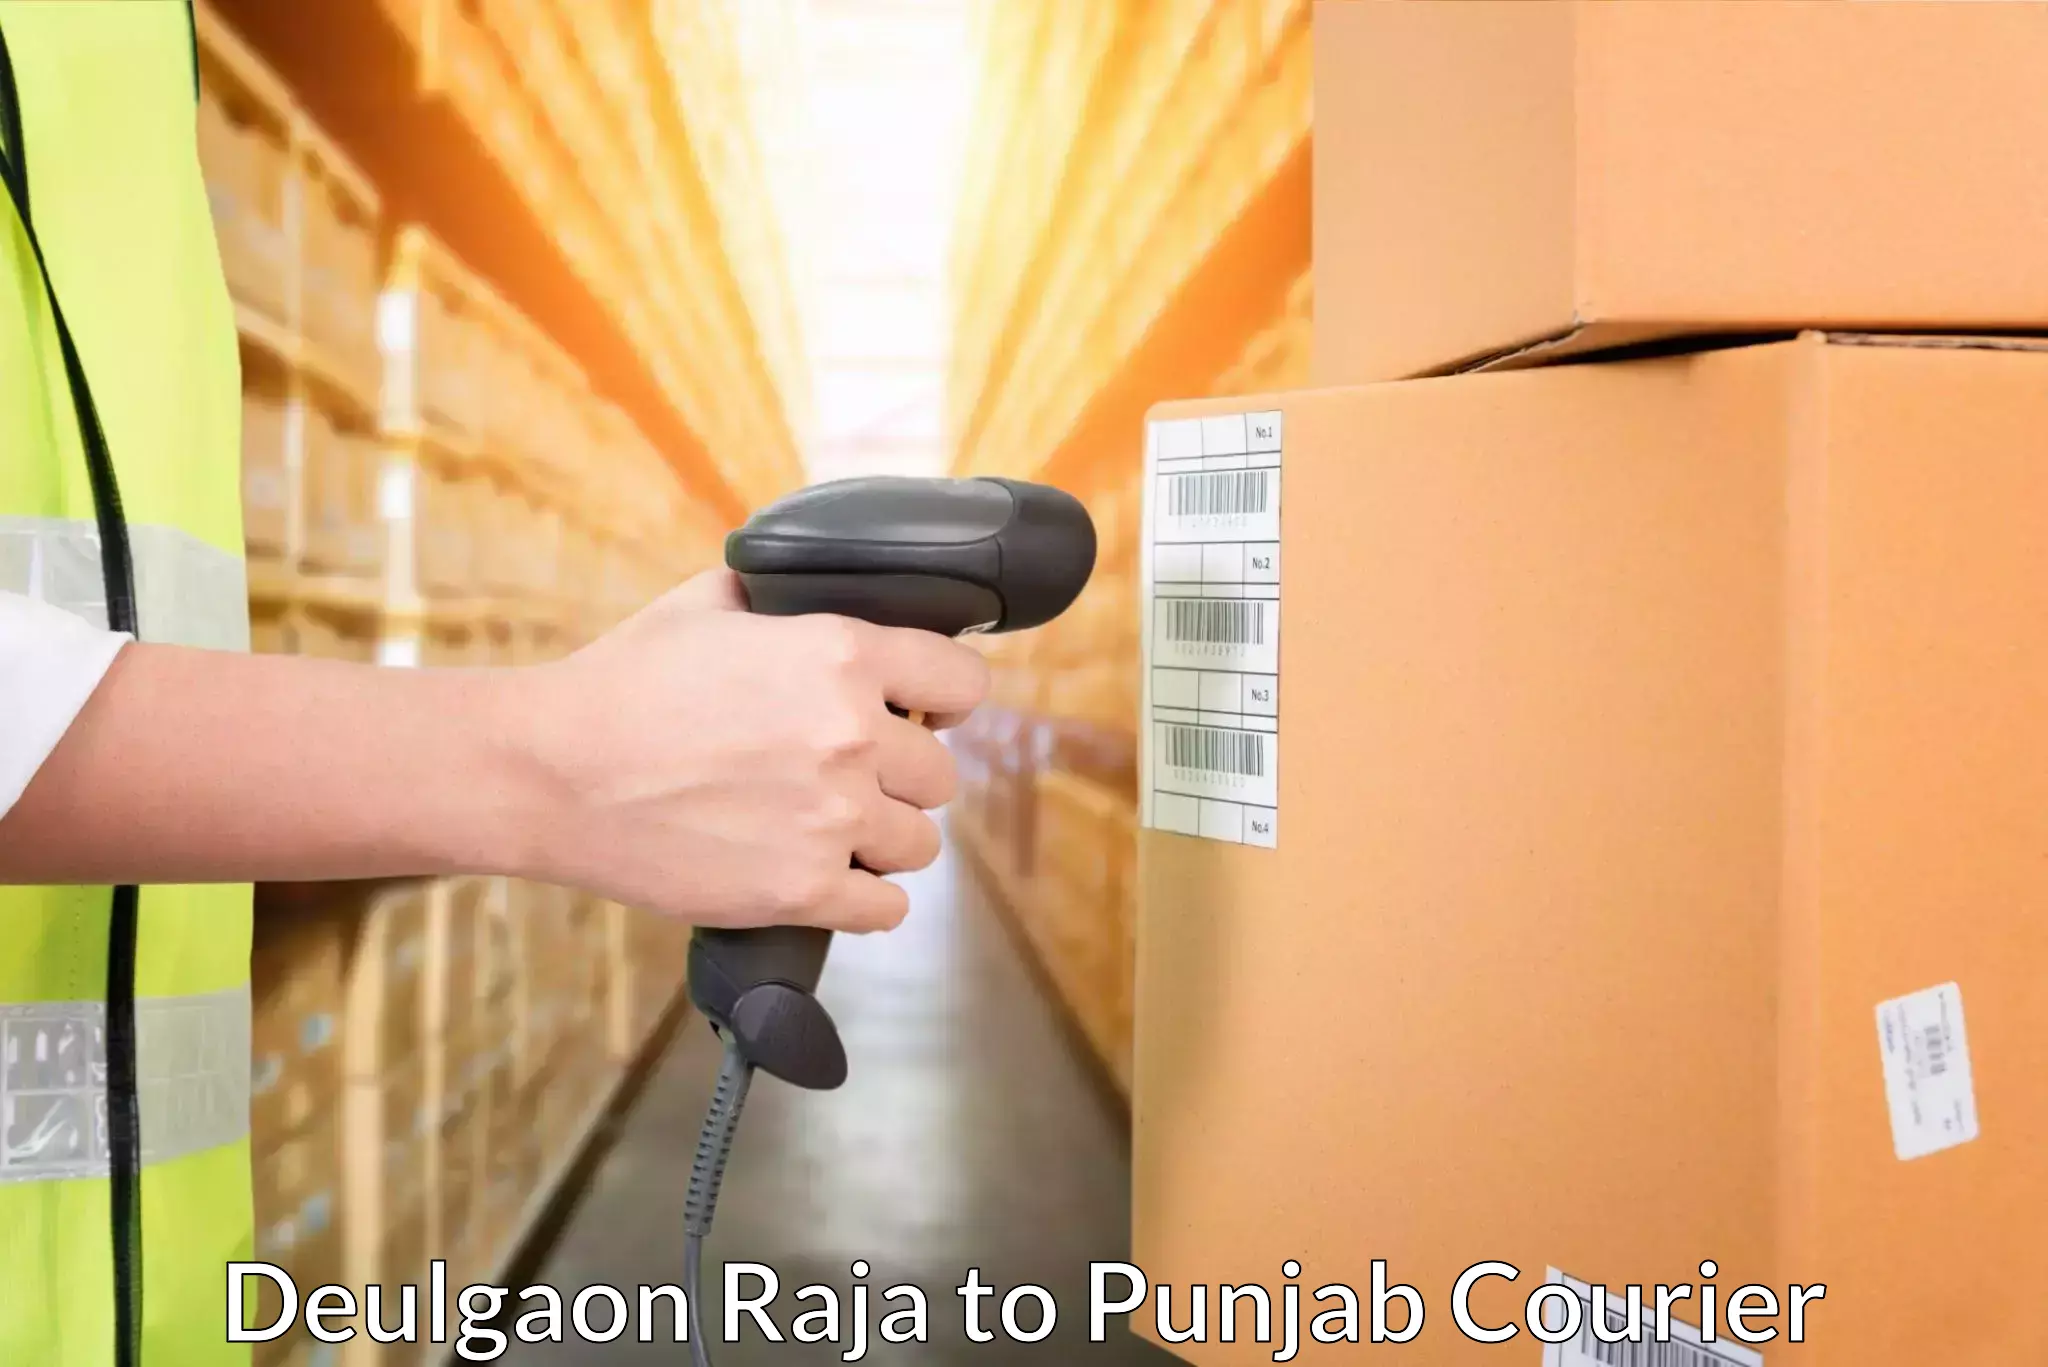 Courier service innovation Deulgaon Raja to Punjab